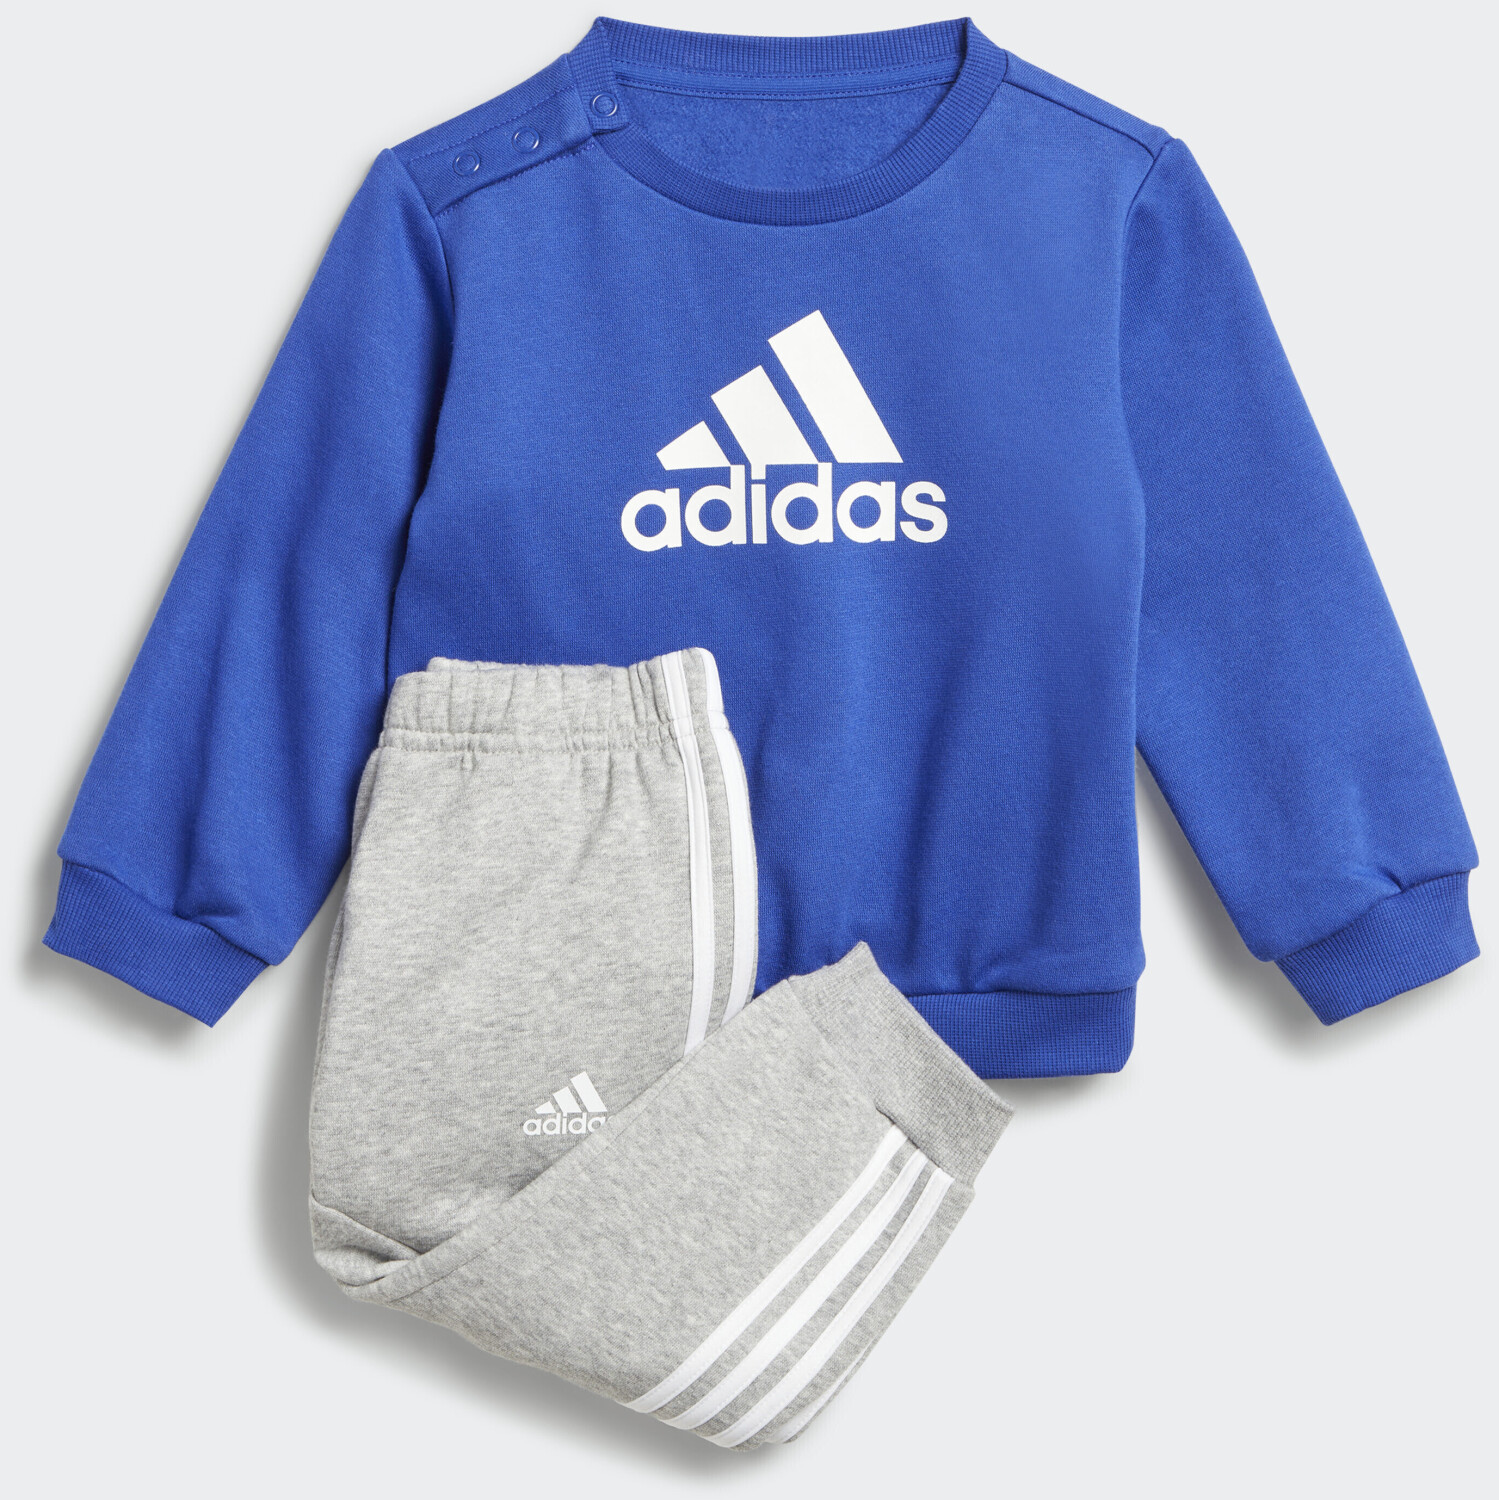 Adidas Kids lucid ab of € bei Badge Preisvergleich (IJ8857) blue/white 29,19 semi Sport Jogginganzug 